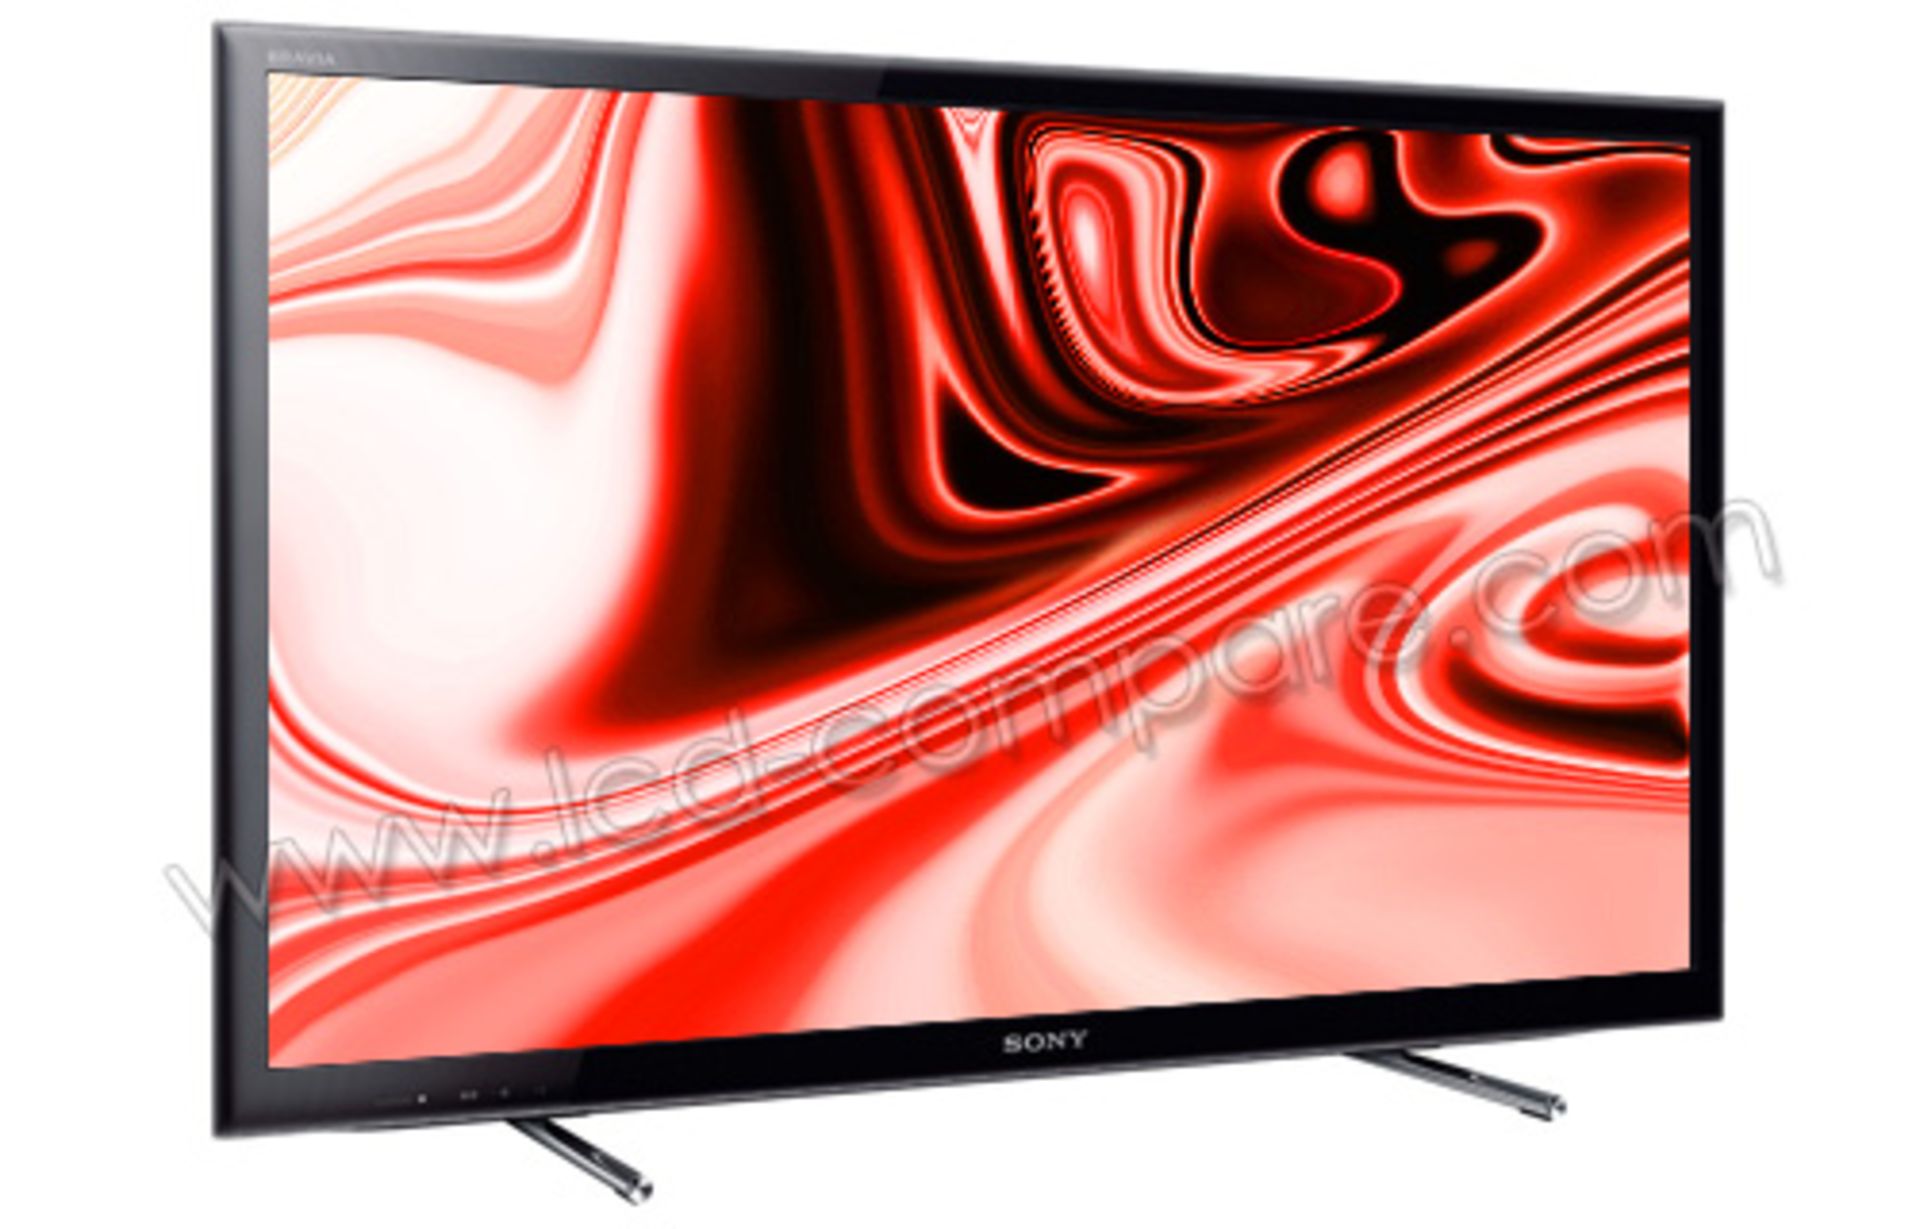 SONY KDL-32EX650 32" 1080P MULTI-SYSTEM BRAVIA HD LED LCD TV - INTERNET READY